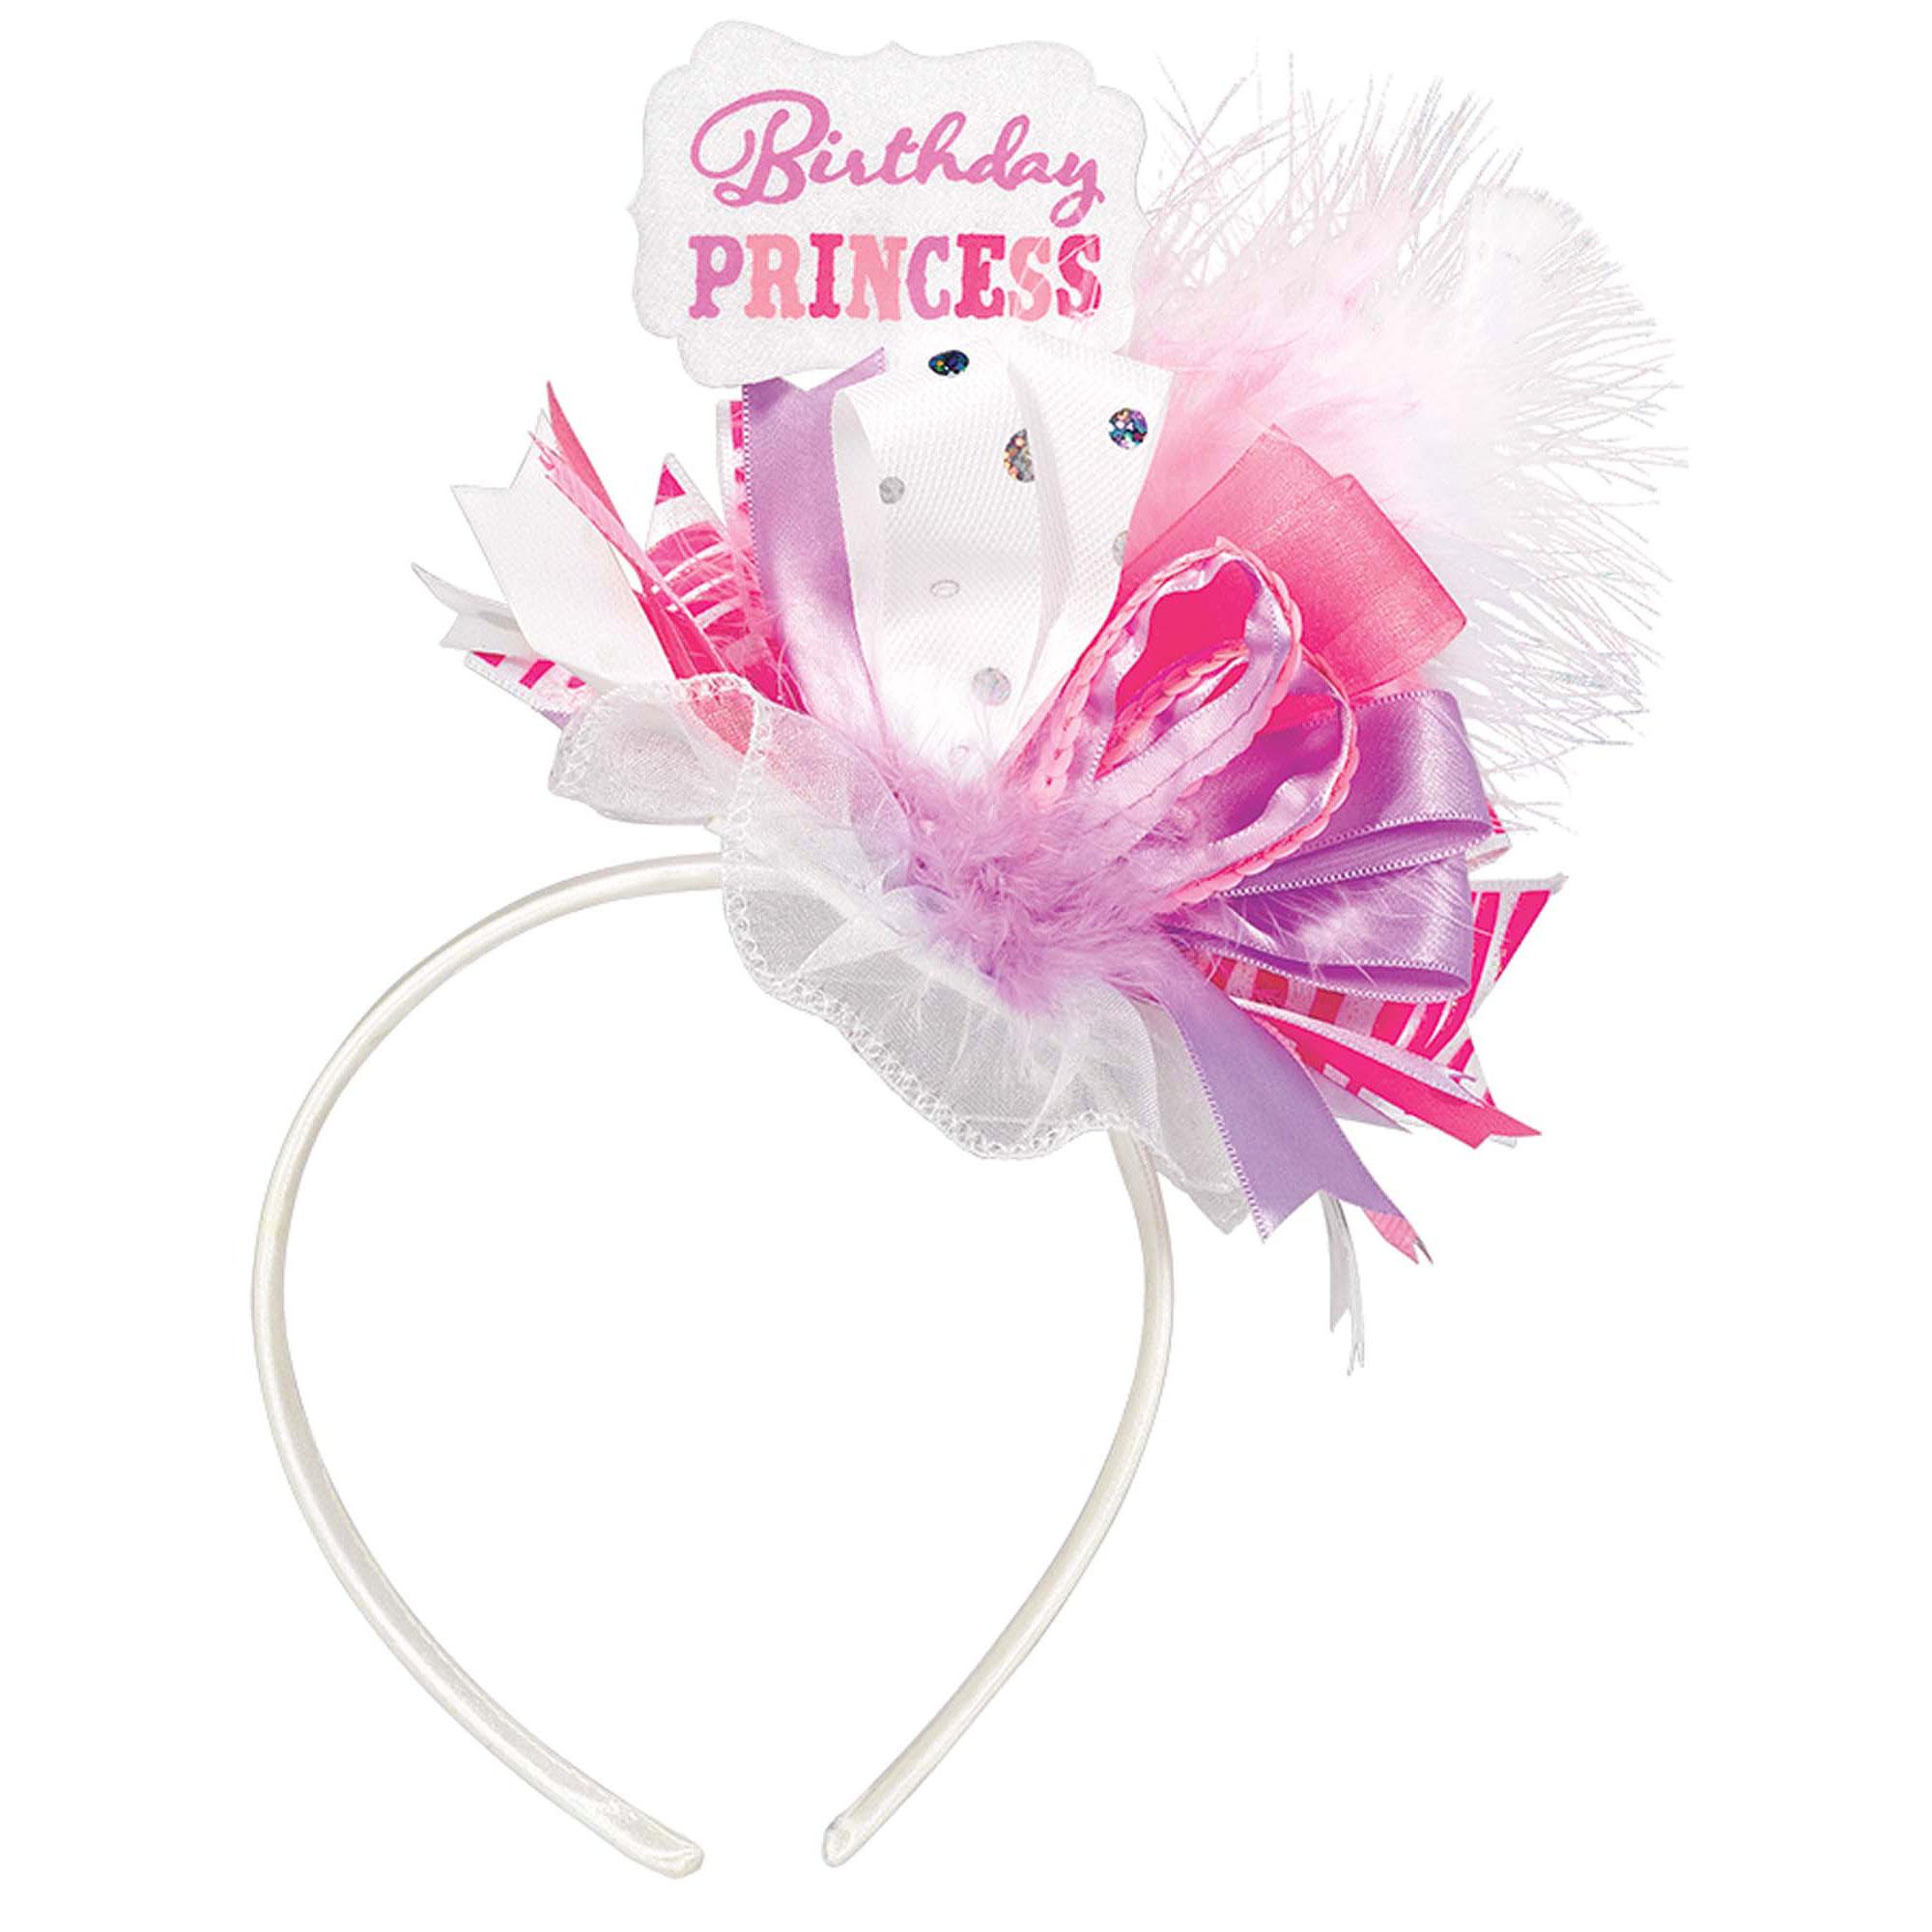 Birthday Princess Fashion Headband Costumes & Apparel - Party Centre - Party Centre